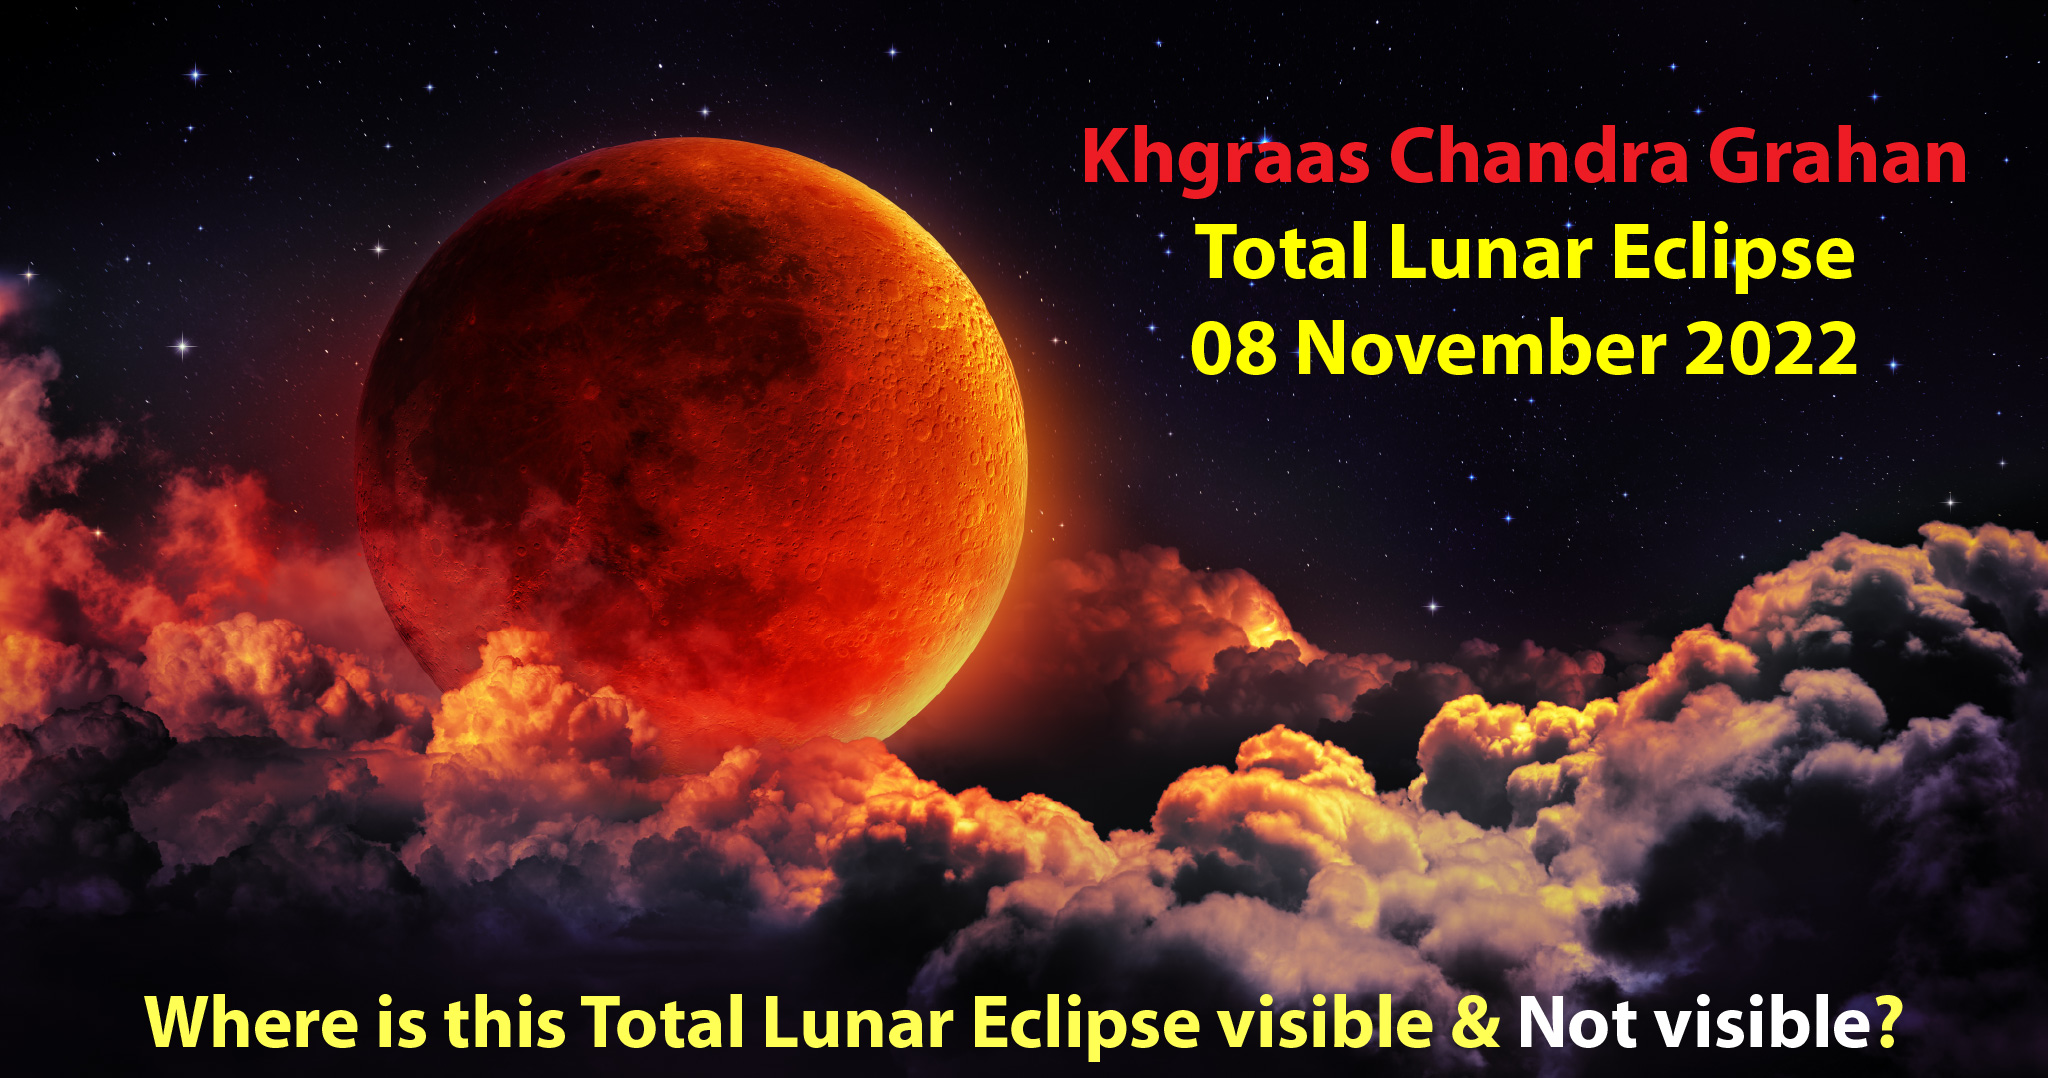 Khgraas Chandra Grahan Total Lunar Eclipse Tuesday, 08 November